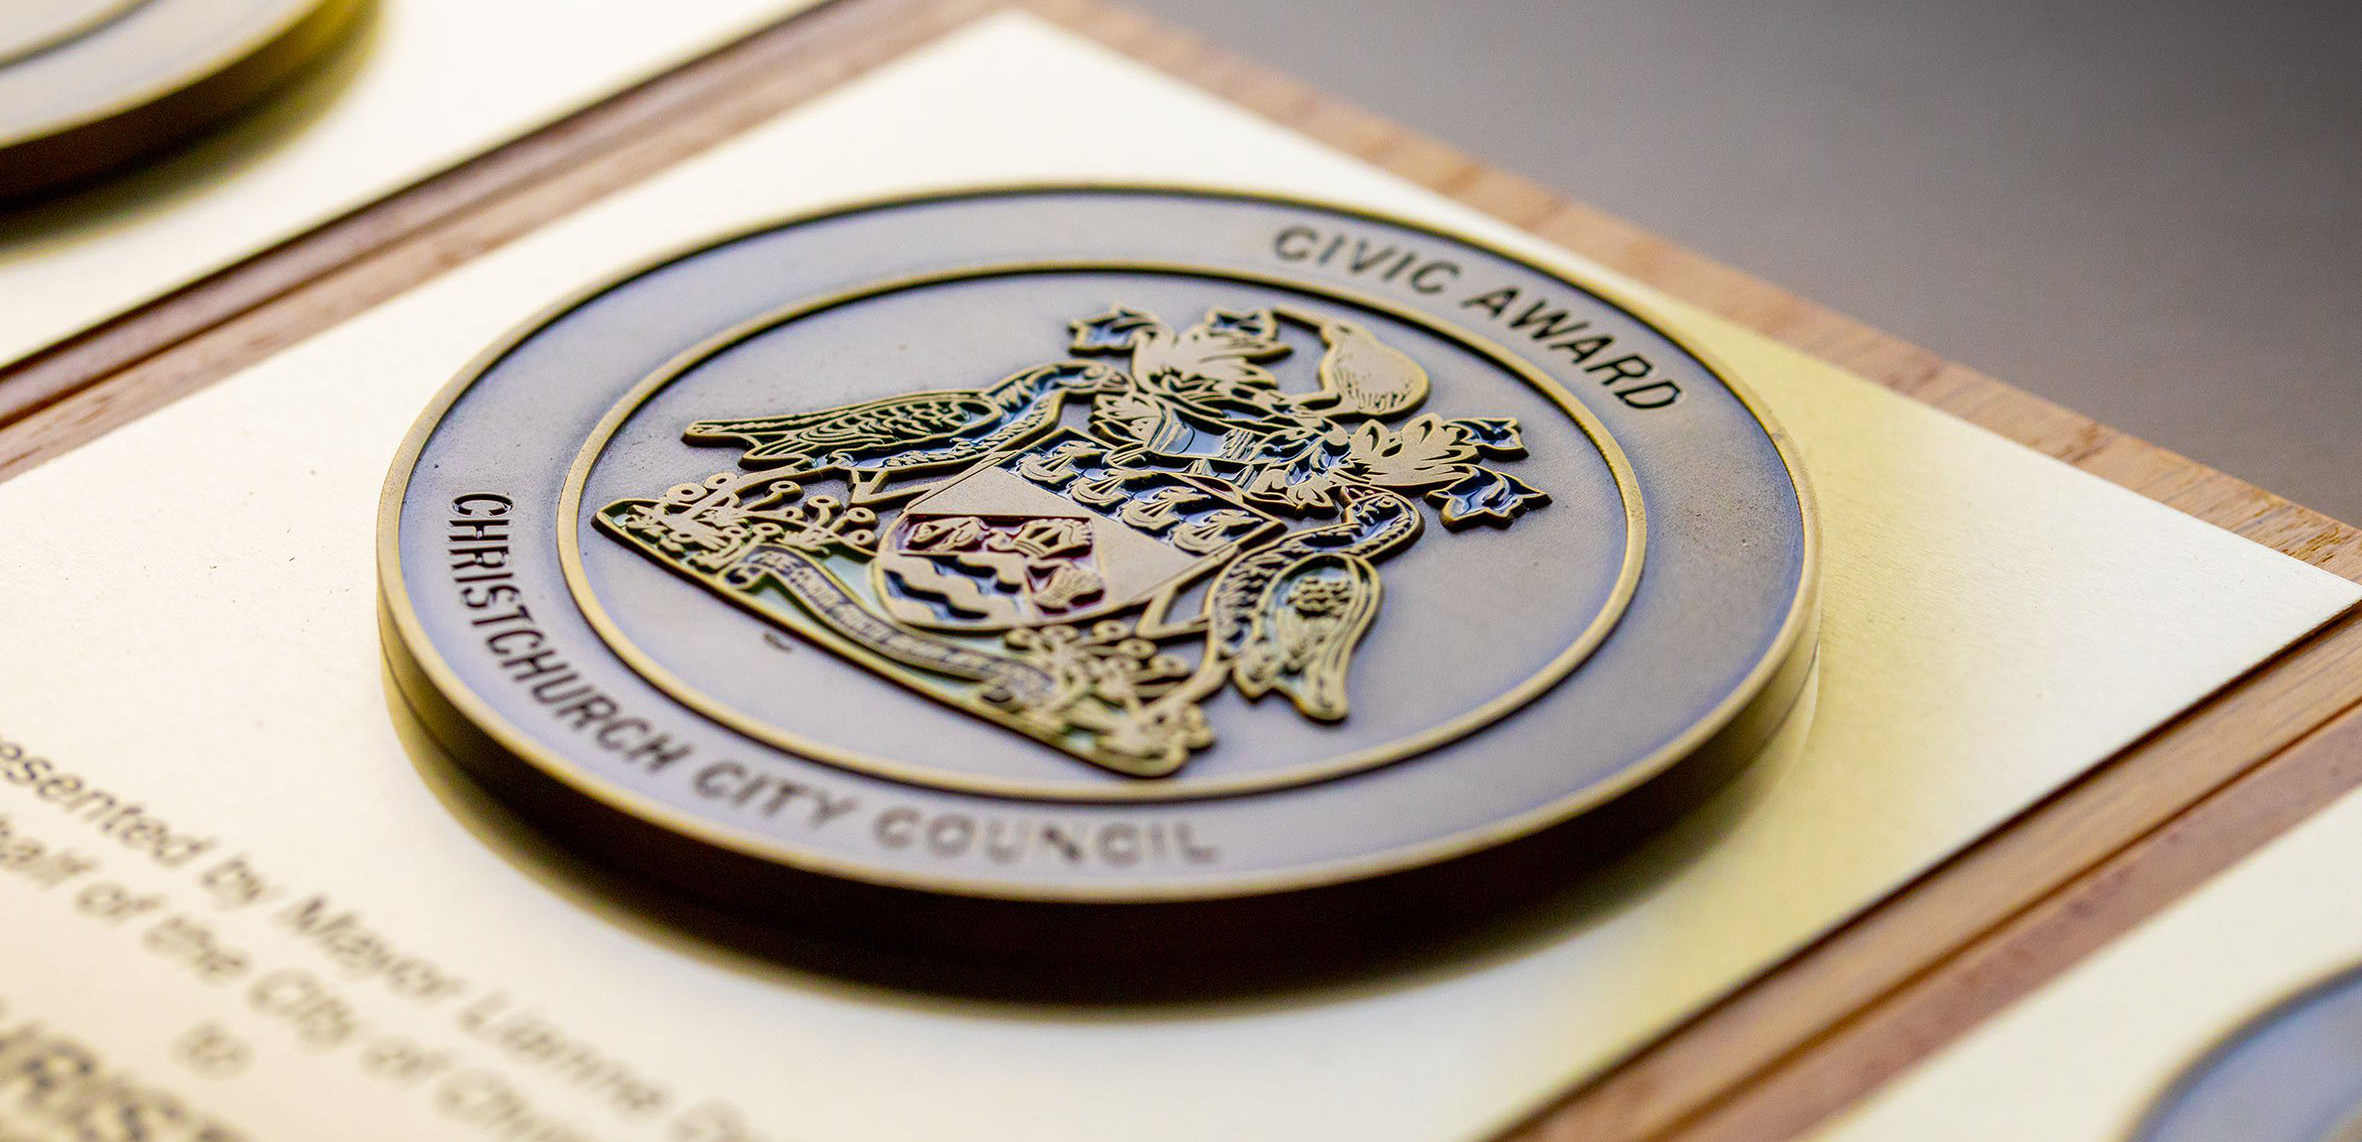 Civic awards medal